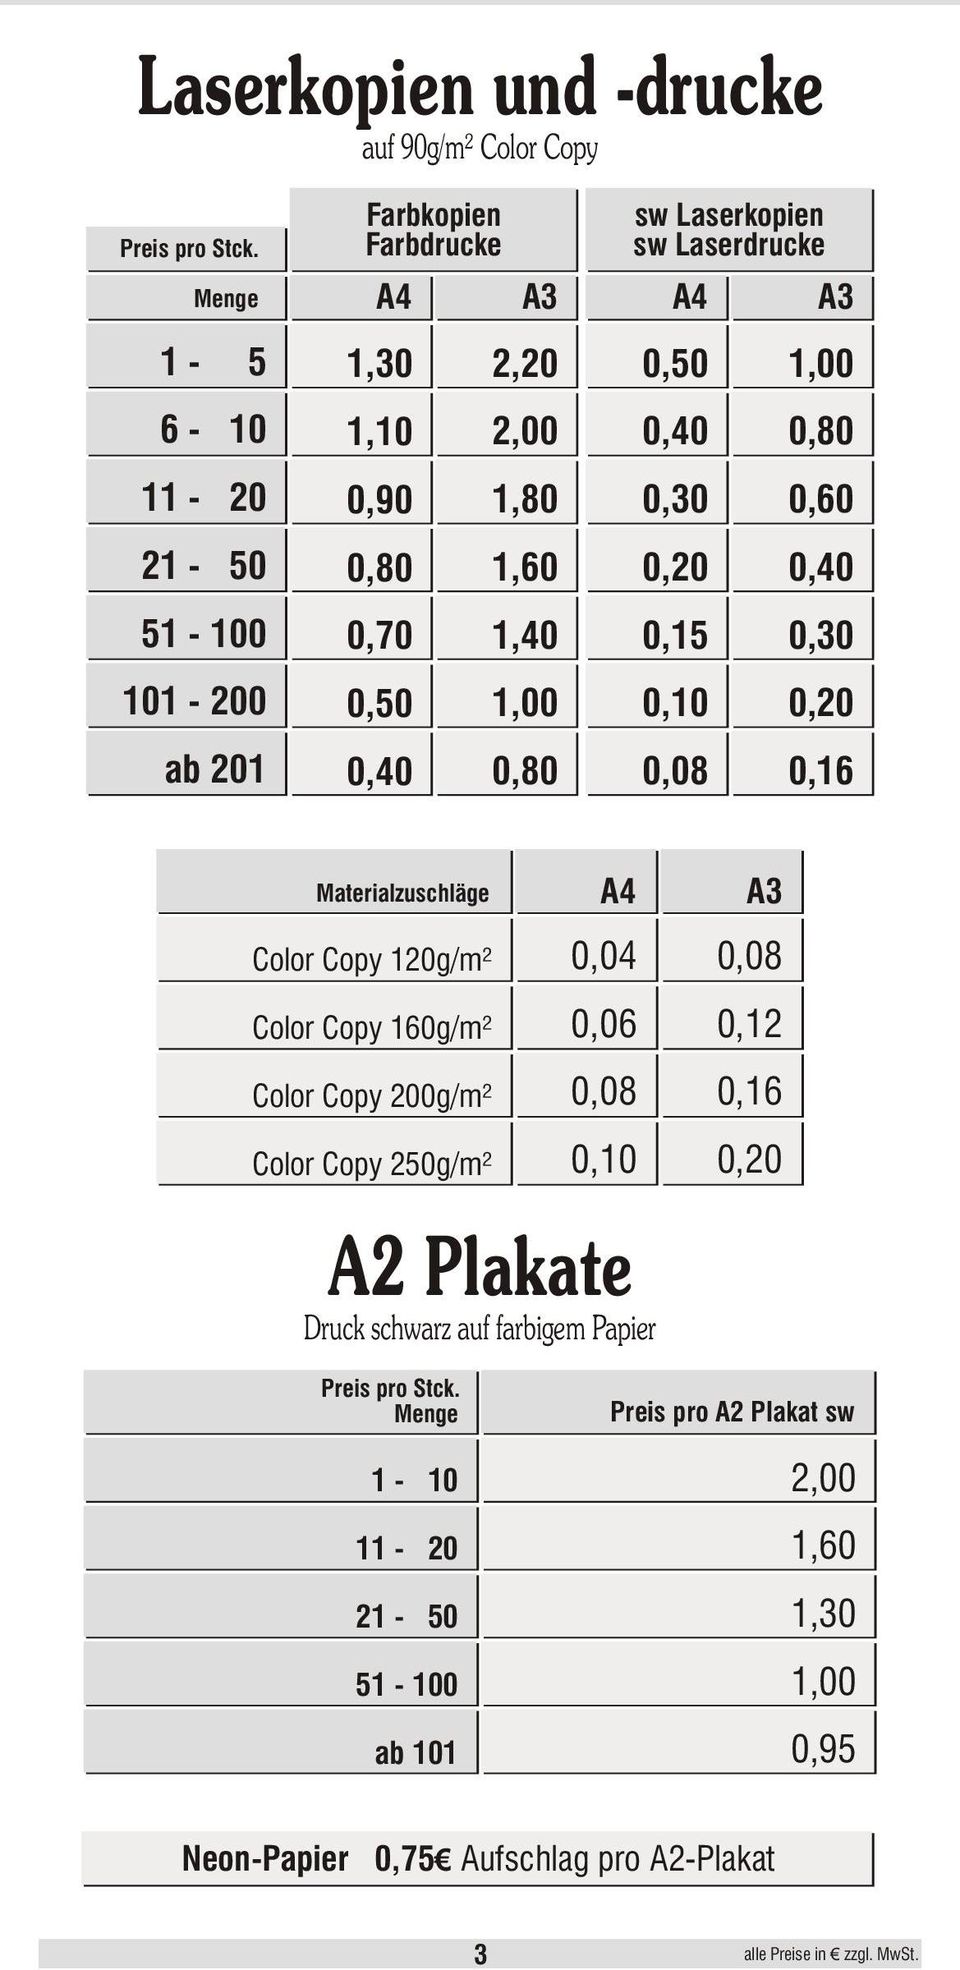 Laserdrucke 0,50 0,40 0,30 0,15 0,10 0,08 A3 1,00 0,60 0,40 0,30 0,16 Materialzuschläge Color Copy 120g/m² Color Copy 160g/m² Color Copy 200g/m² Color Copy